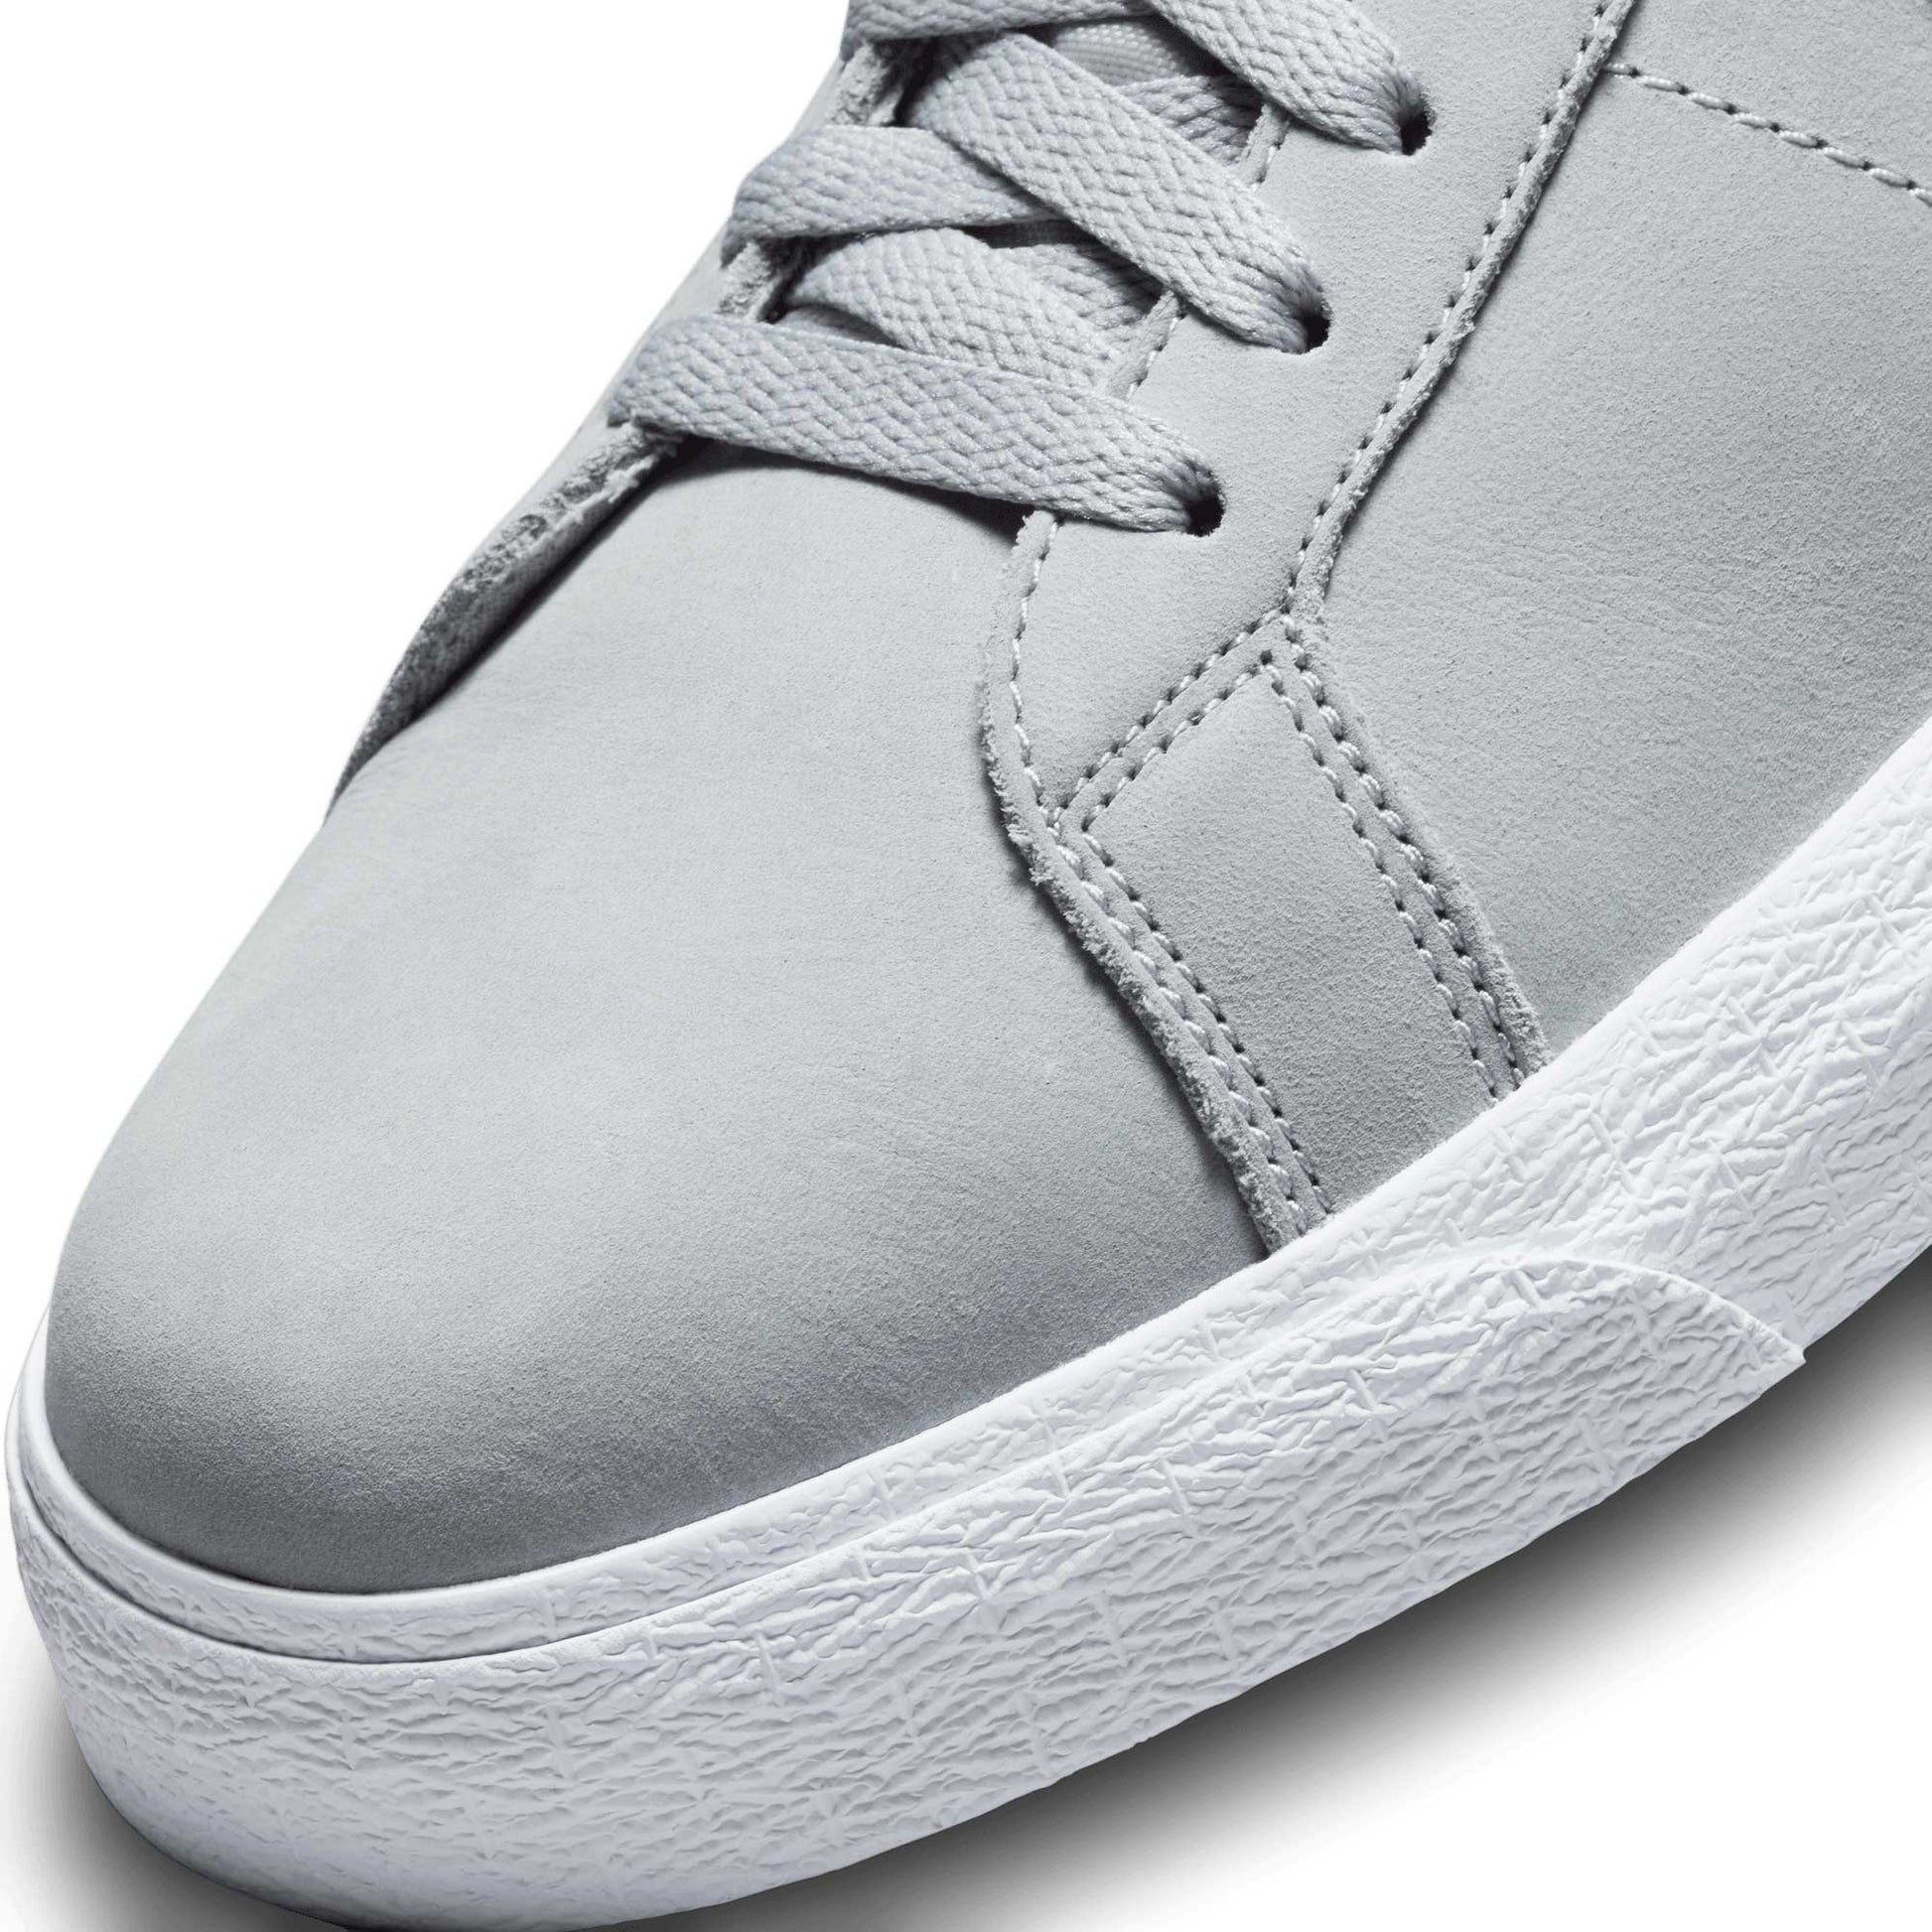 Nike SB Zoom Blazer Mid ISO, wolf grey/white-wolf grey - Tiki Room Skateboards - 10